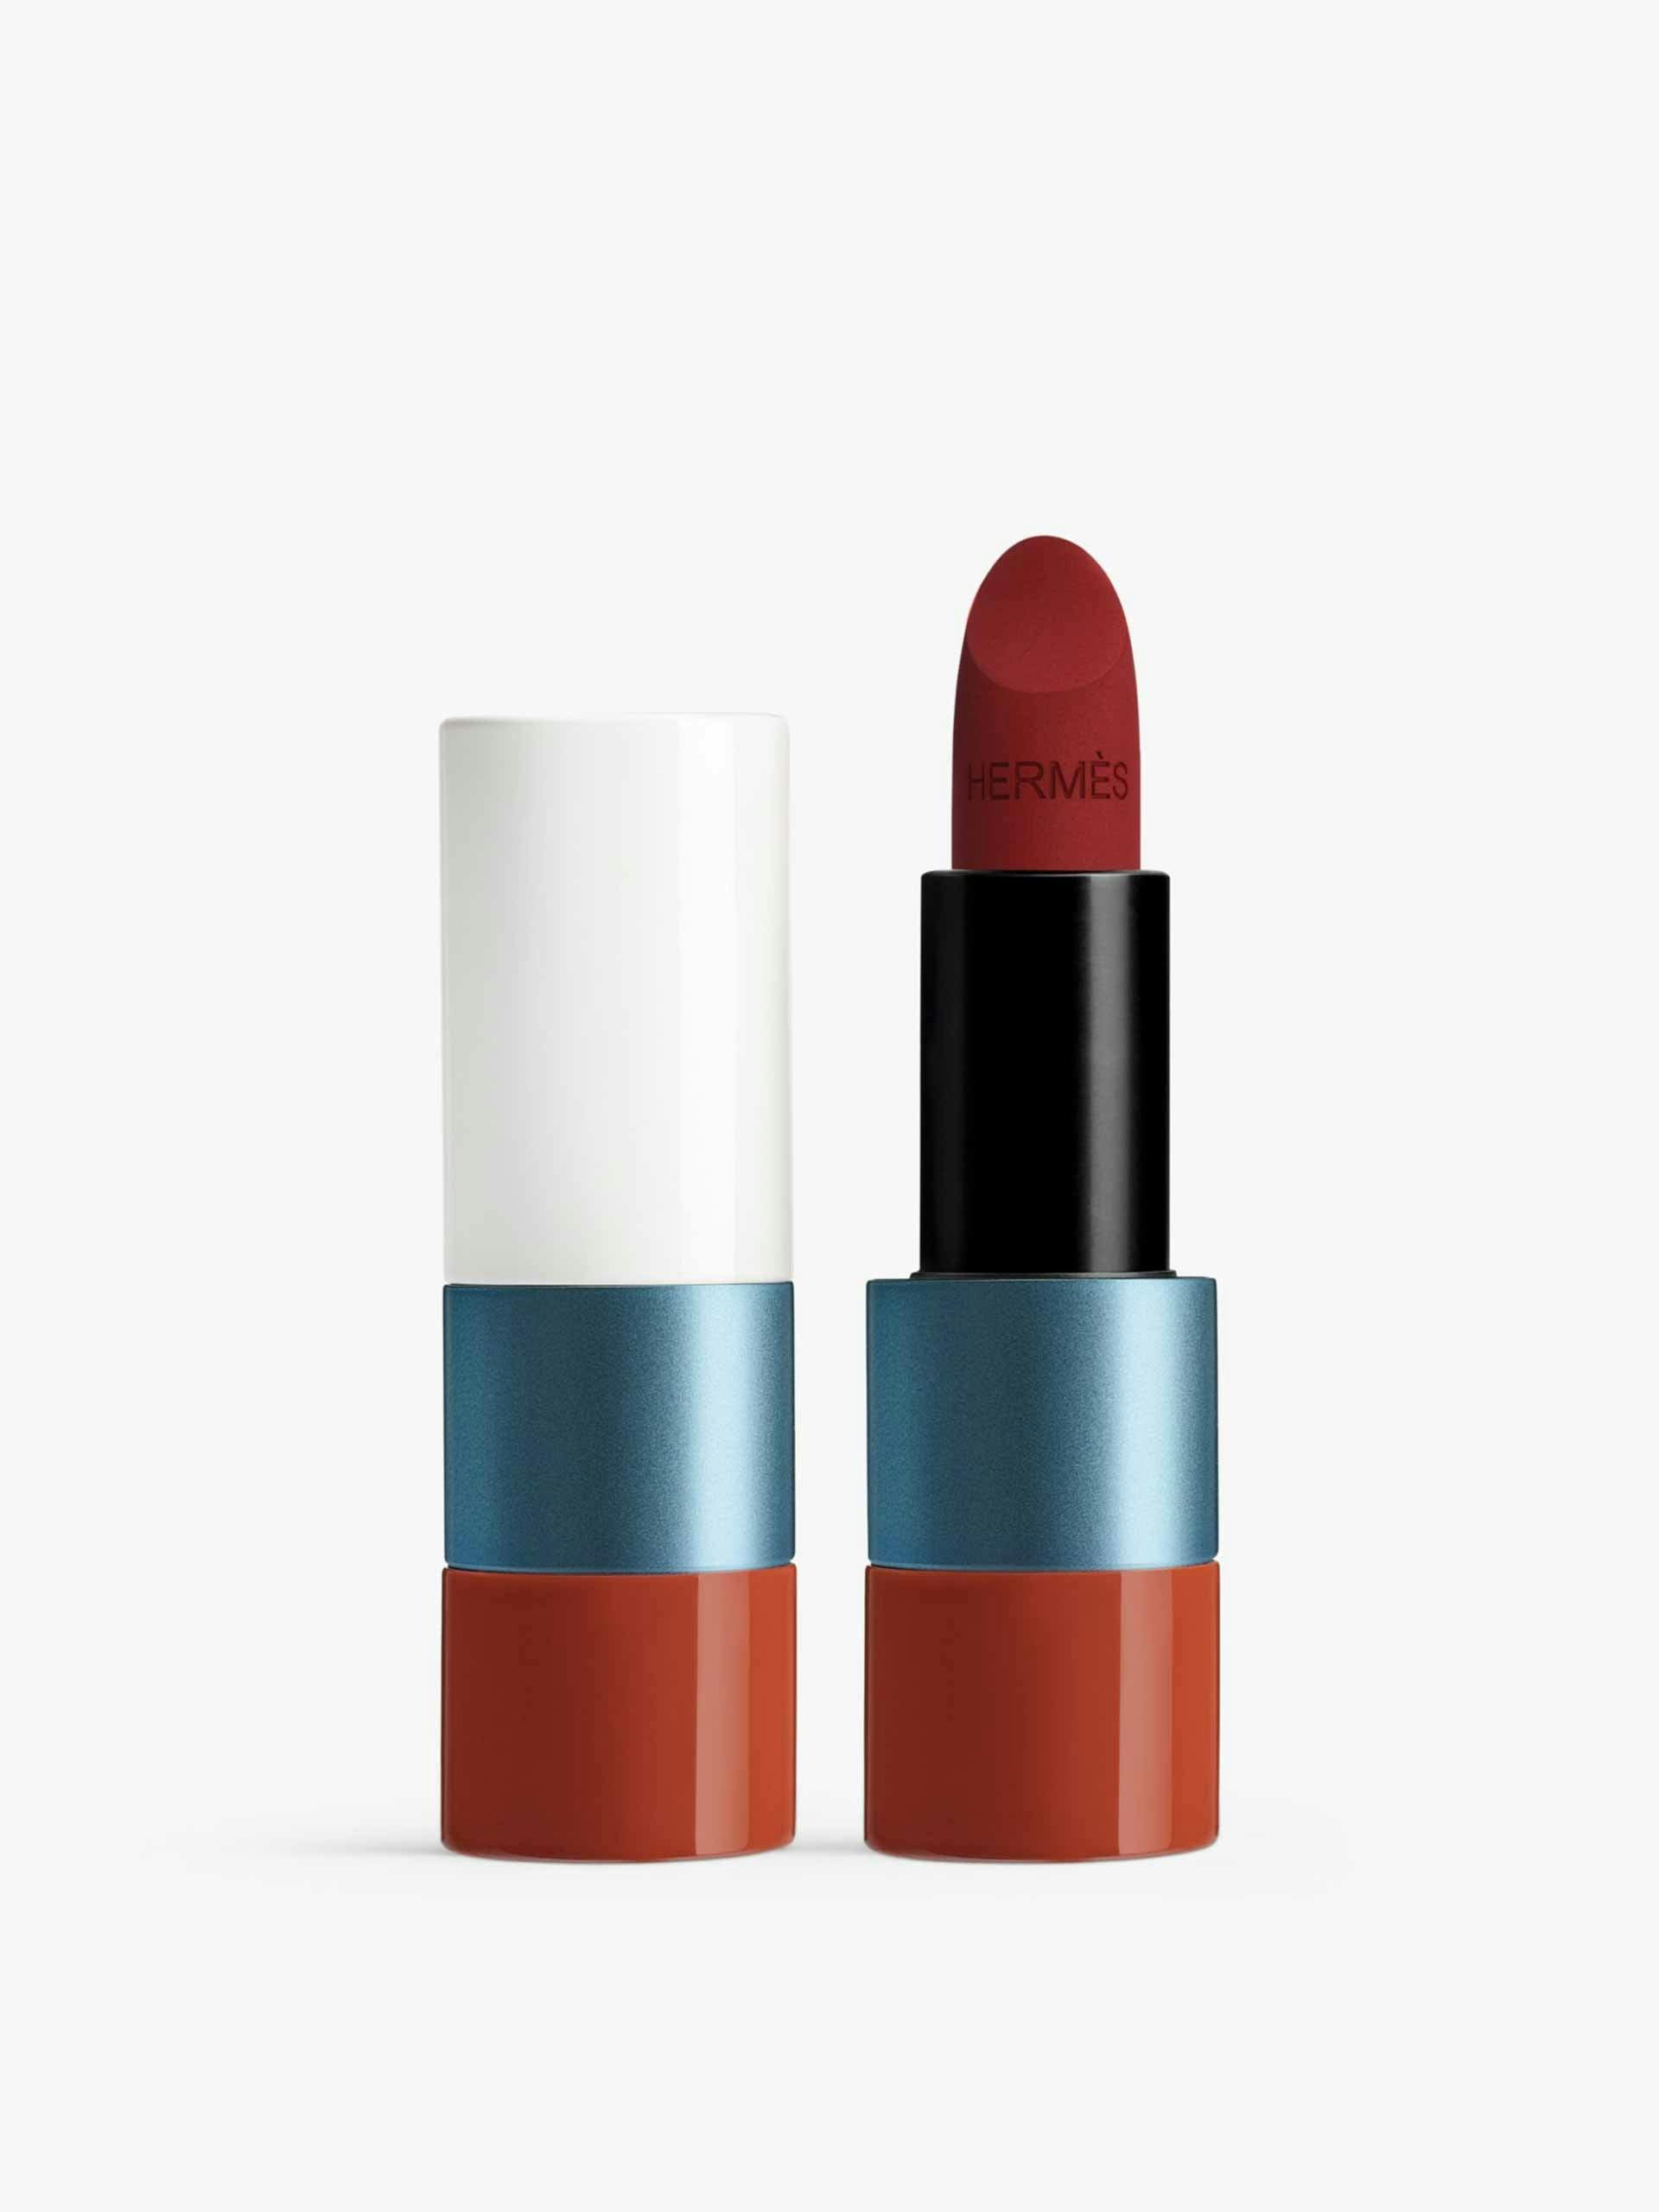 Limited edition lipstick